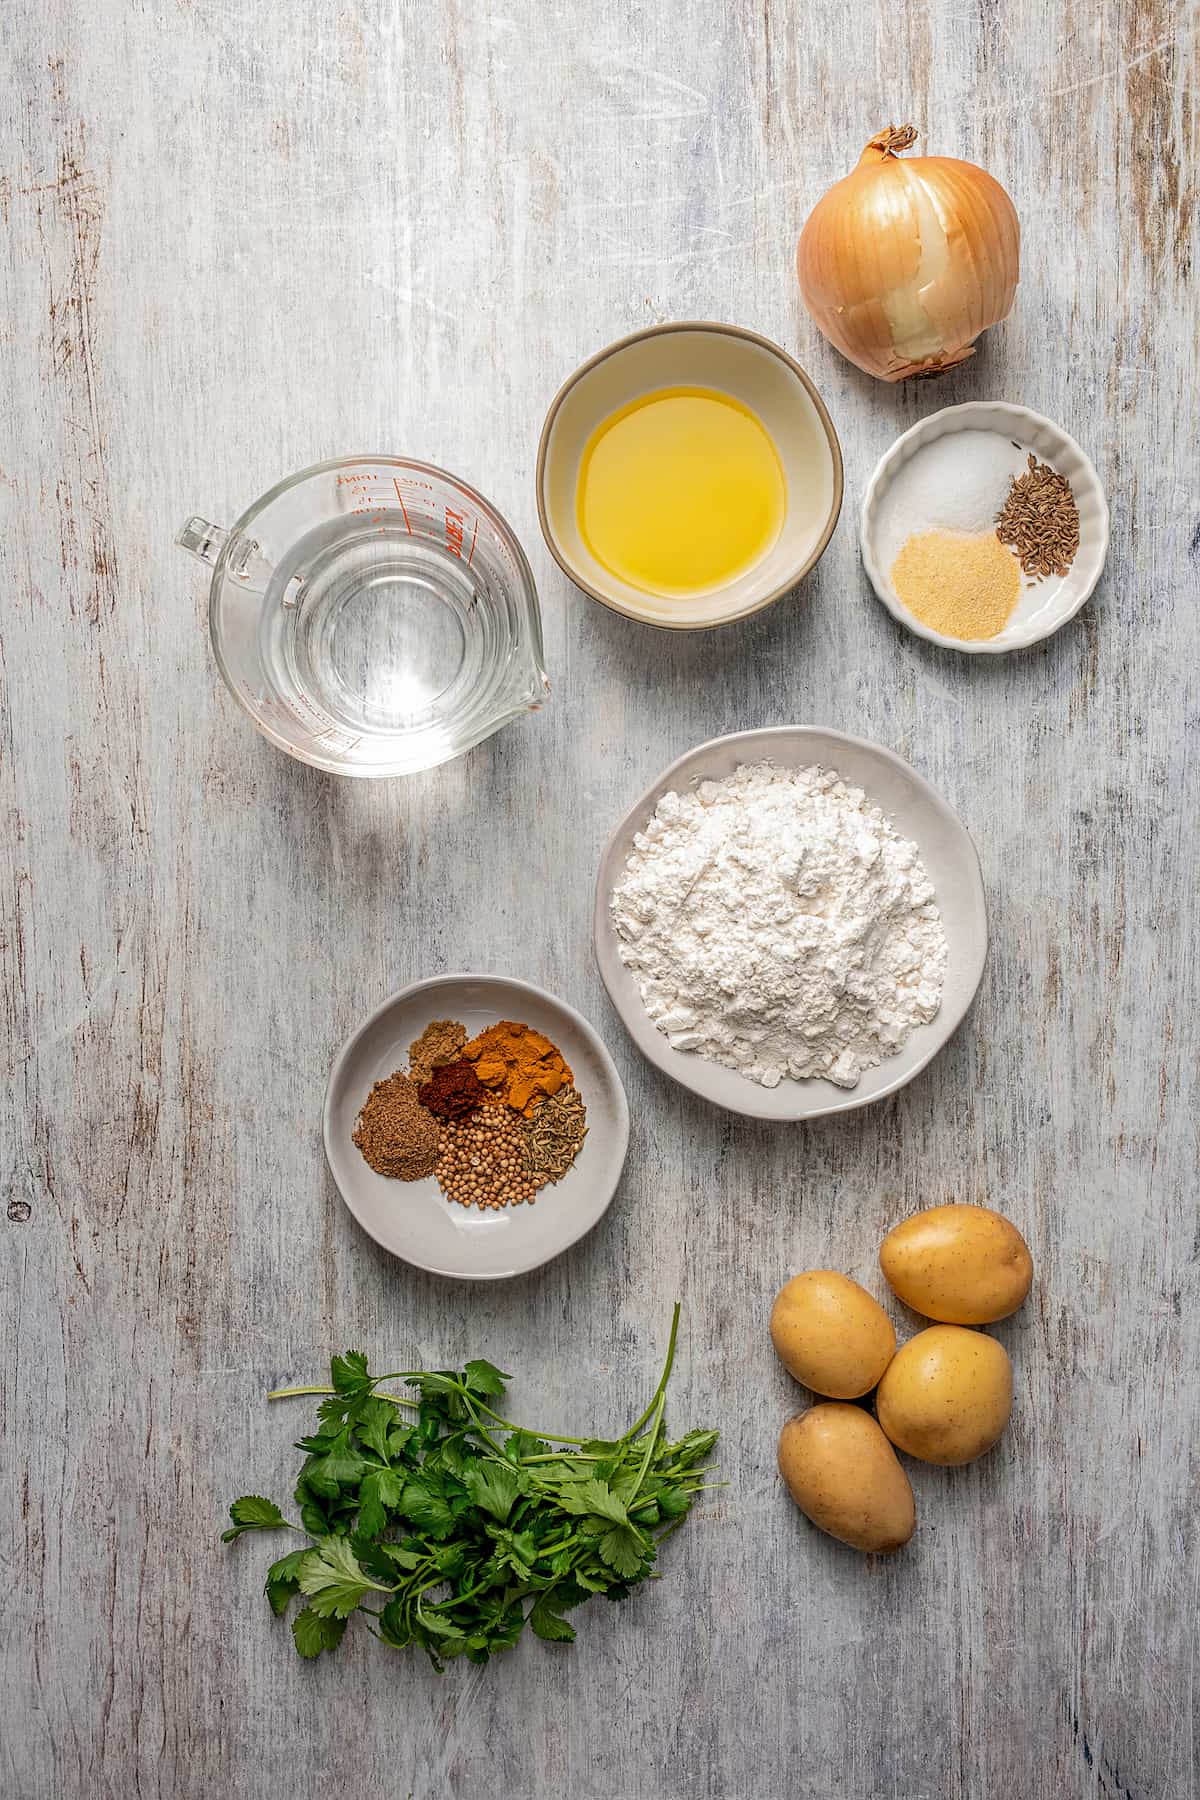 Ingredients for homemade samosas.